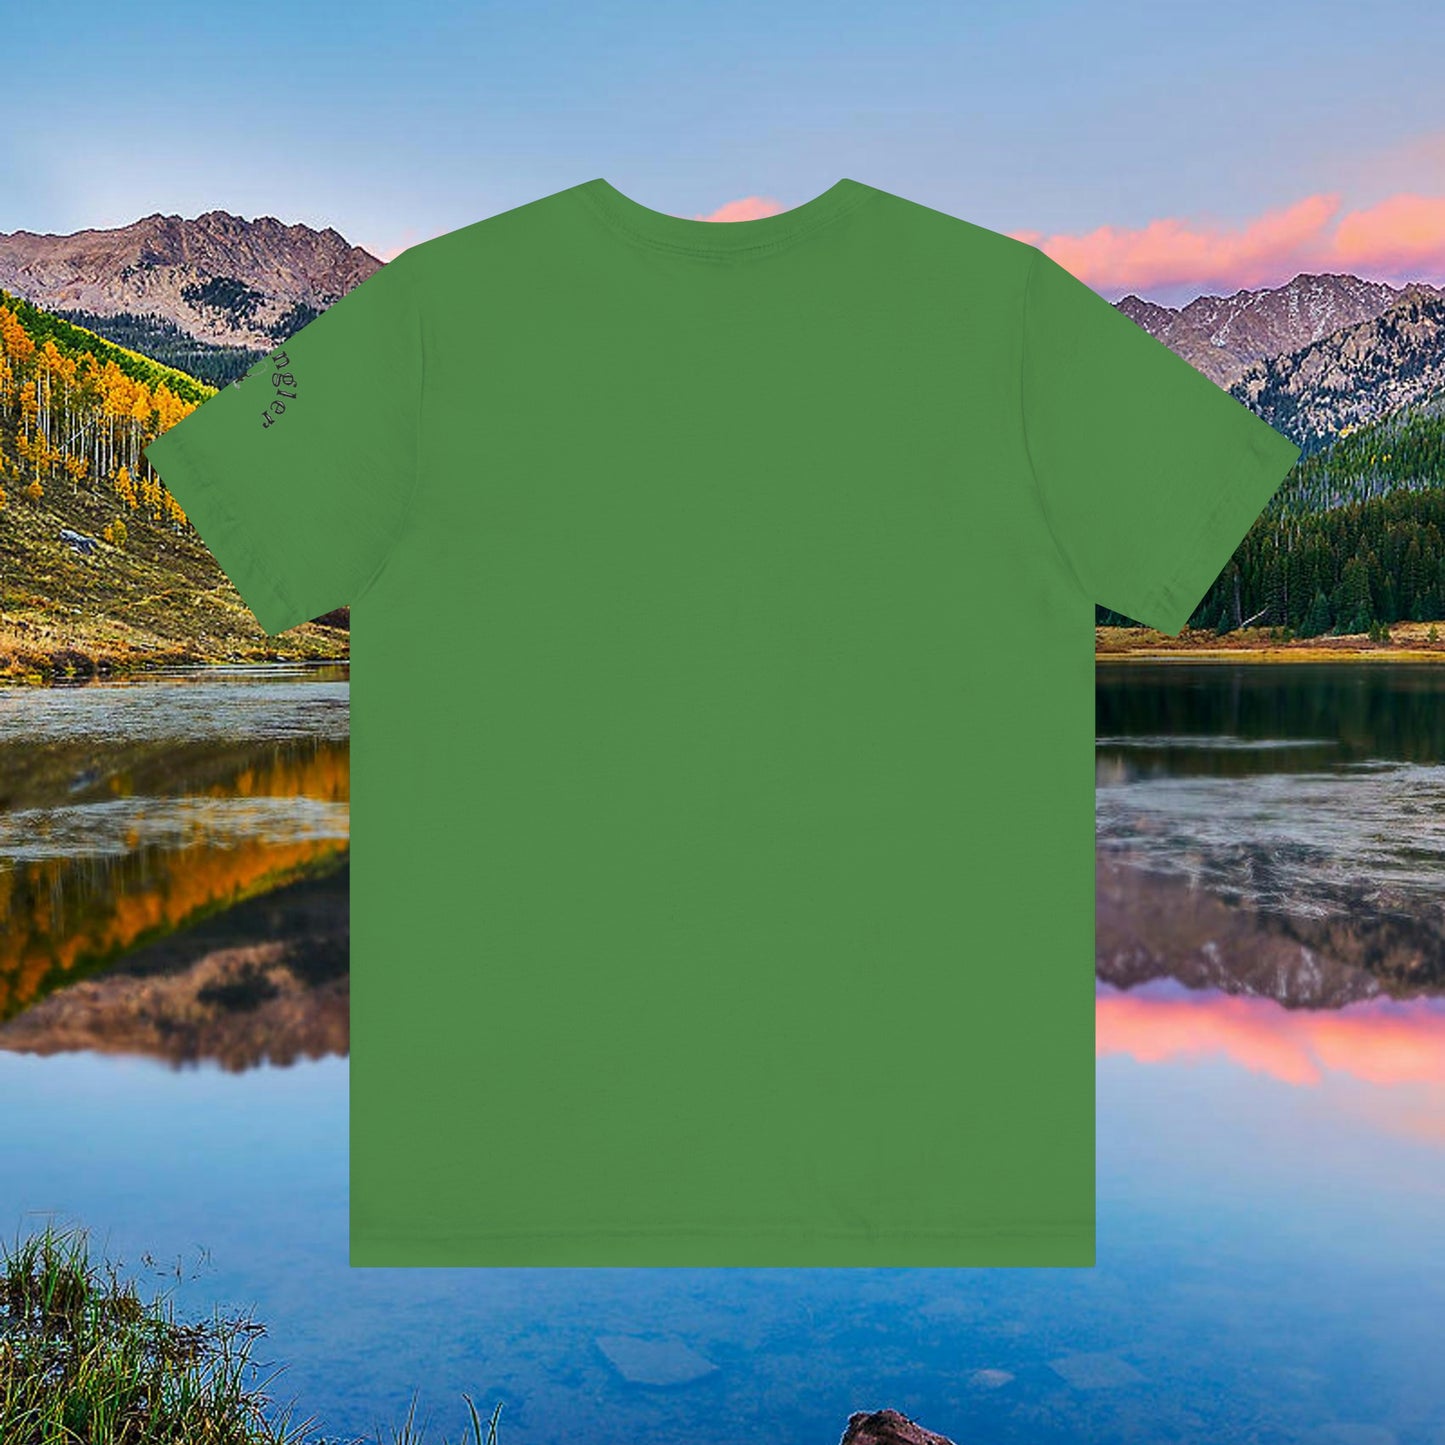 St. Pattys Day Shirt, Irish Shirt, Irish Fishing Shirt